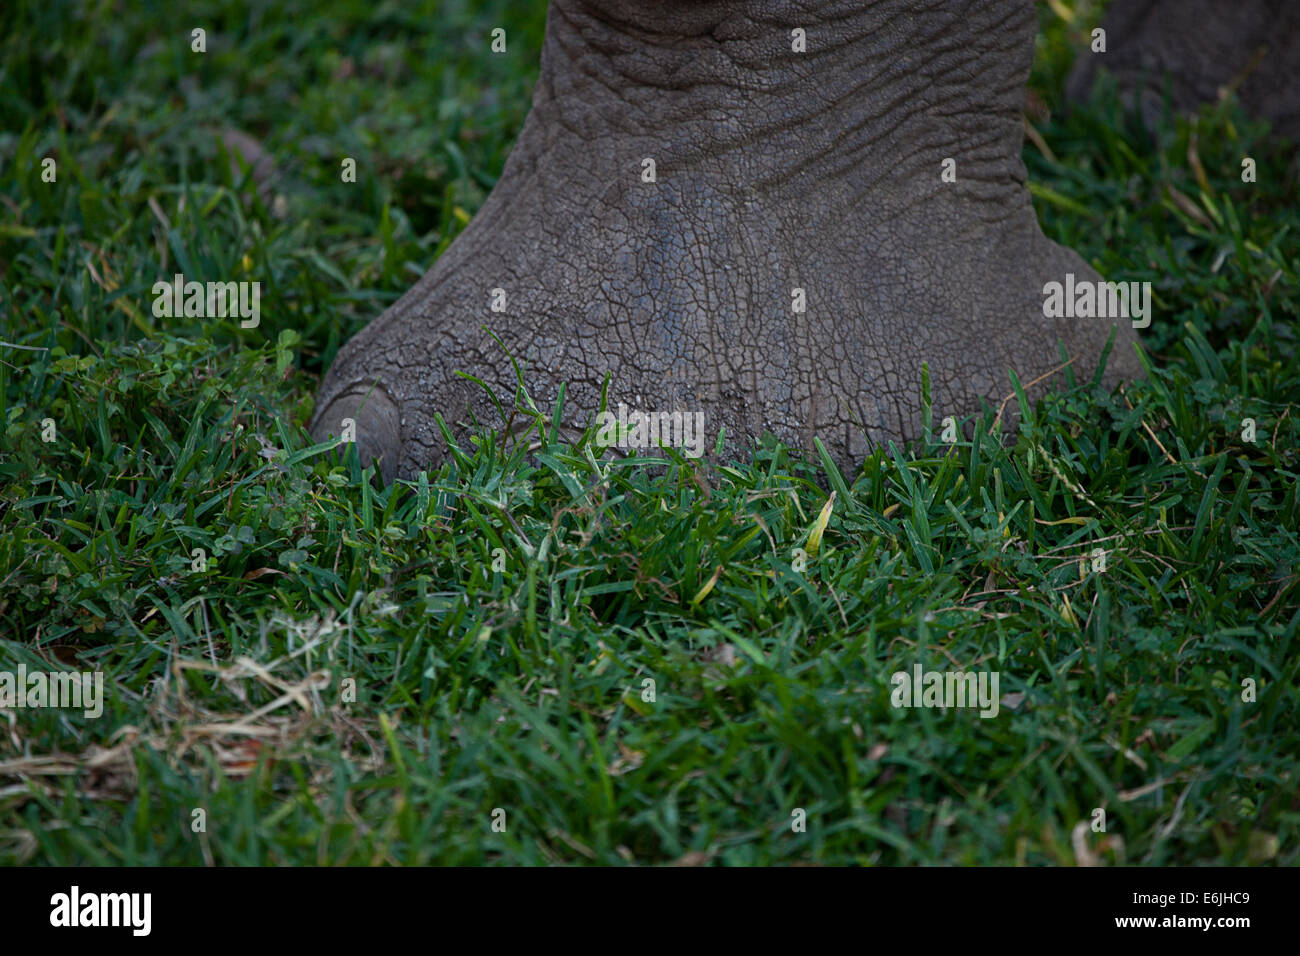 Close up of elephants foot Banque D'Images